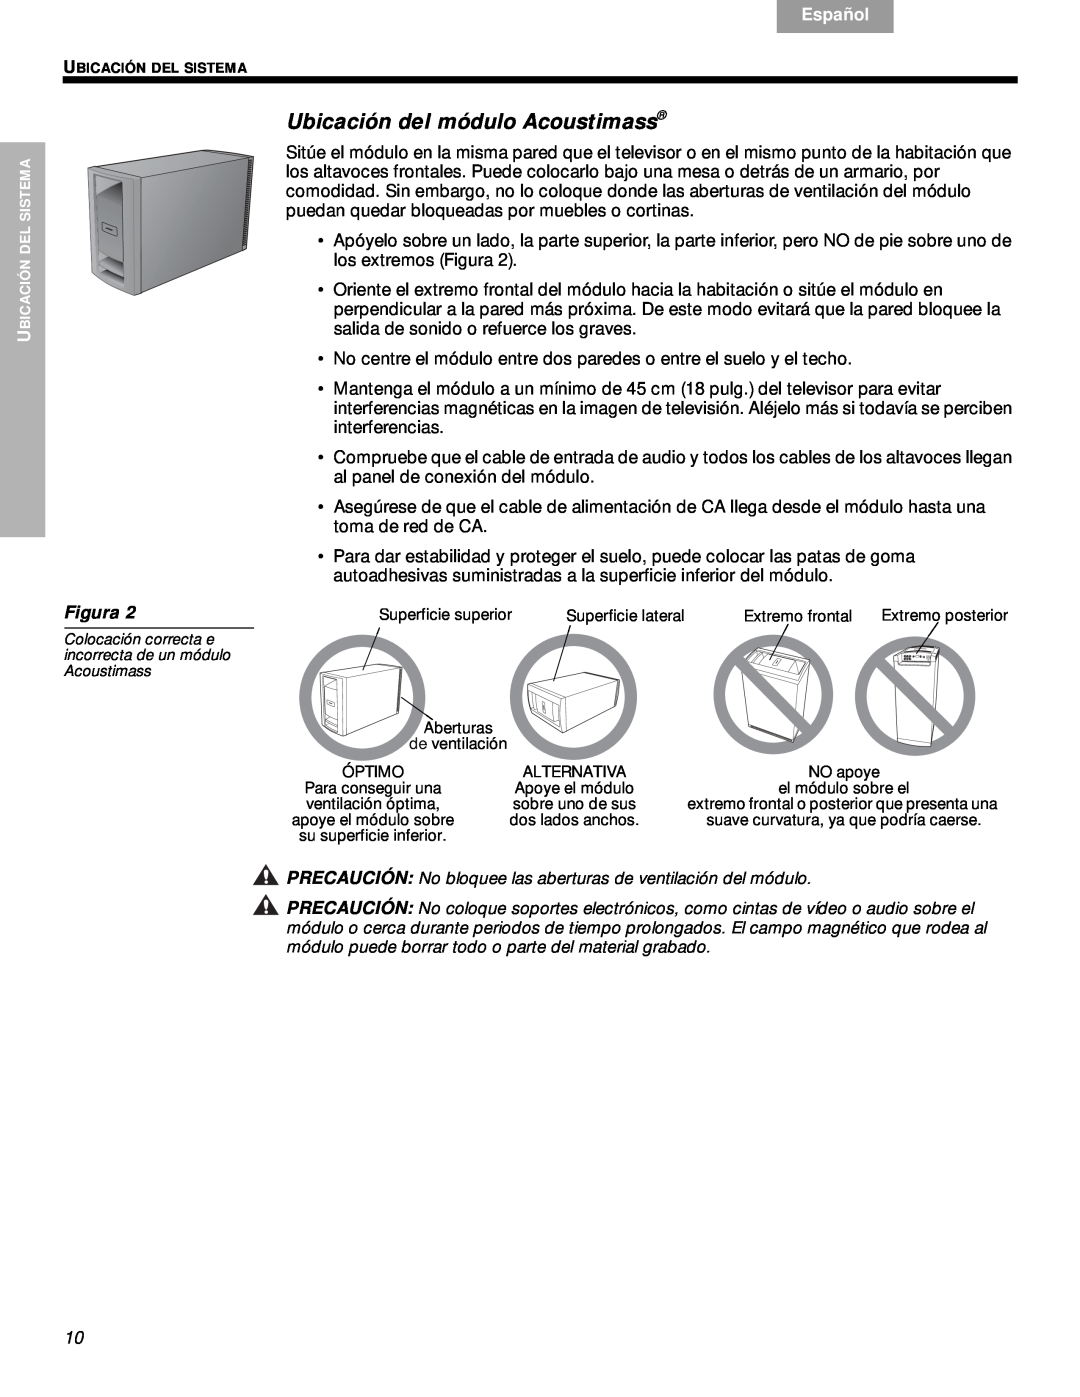 Bose VS-2 manual Ubicación del módulo Acoustimass, Svenska, Nederlands, Français, Español, English, Figura 